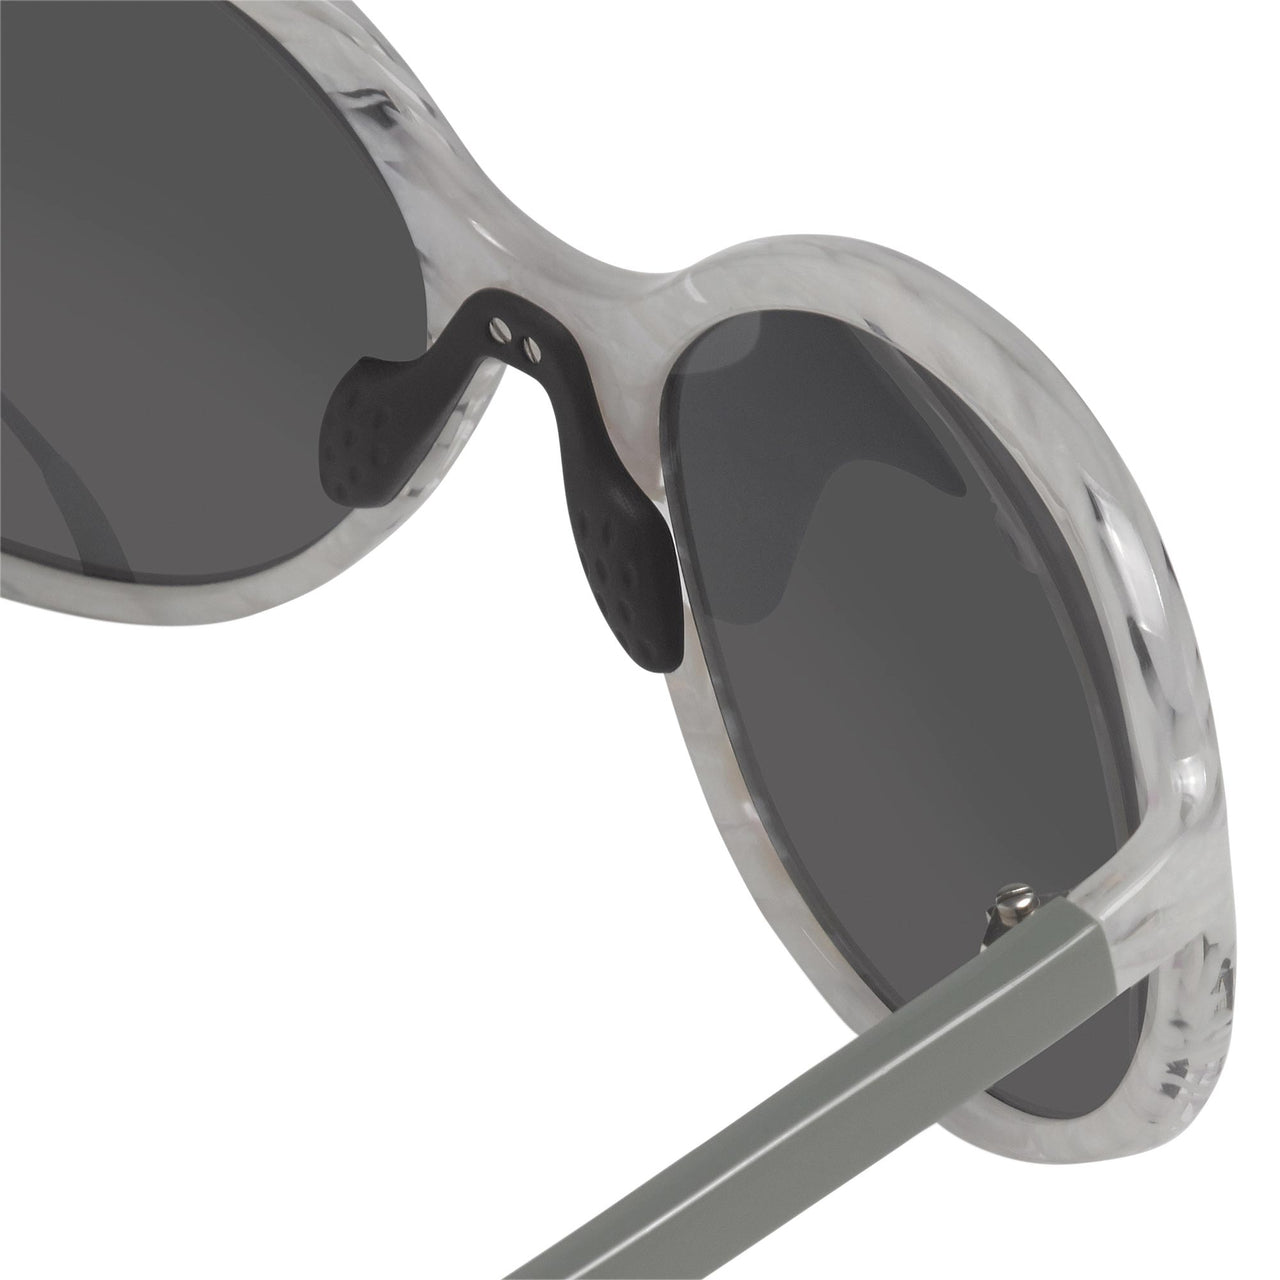 Prabal Gurung Sunglasses Oversized White and Grey